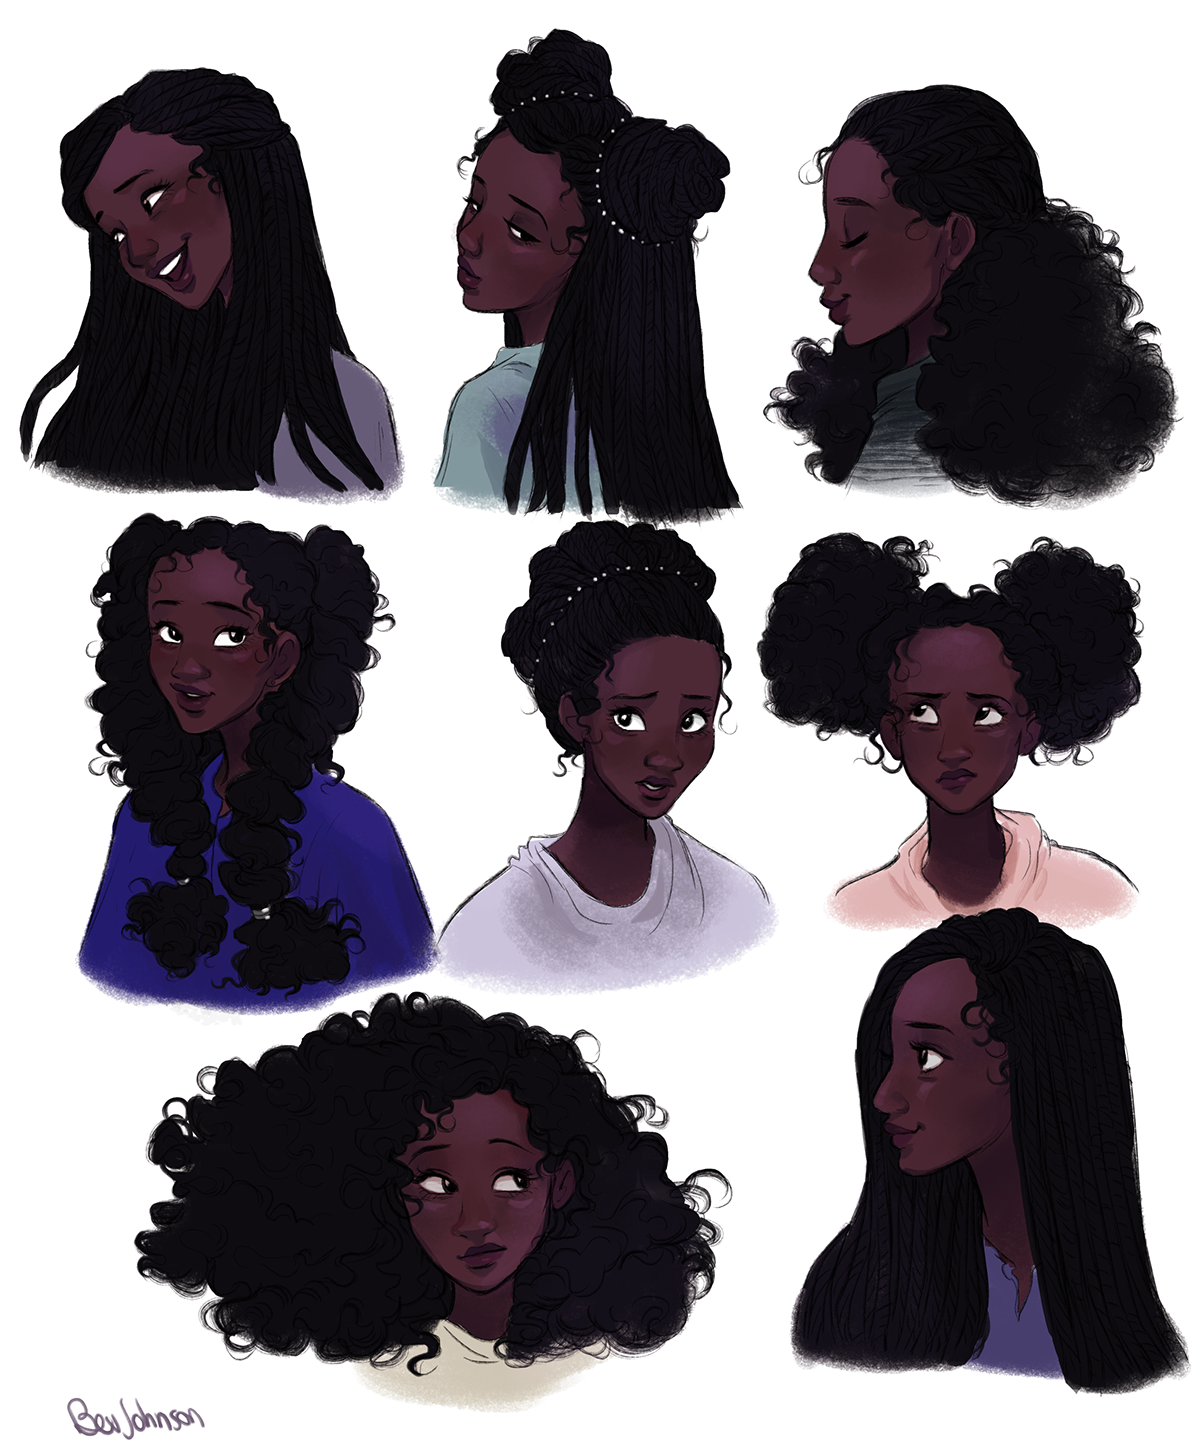 Афро кудри референс. Афро волосы референс. Волосы чернокожих референс. Темнокожие персонажи.